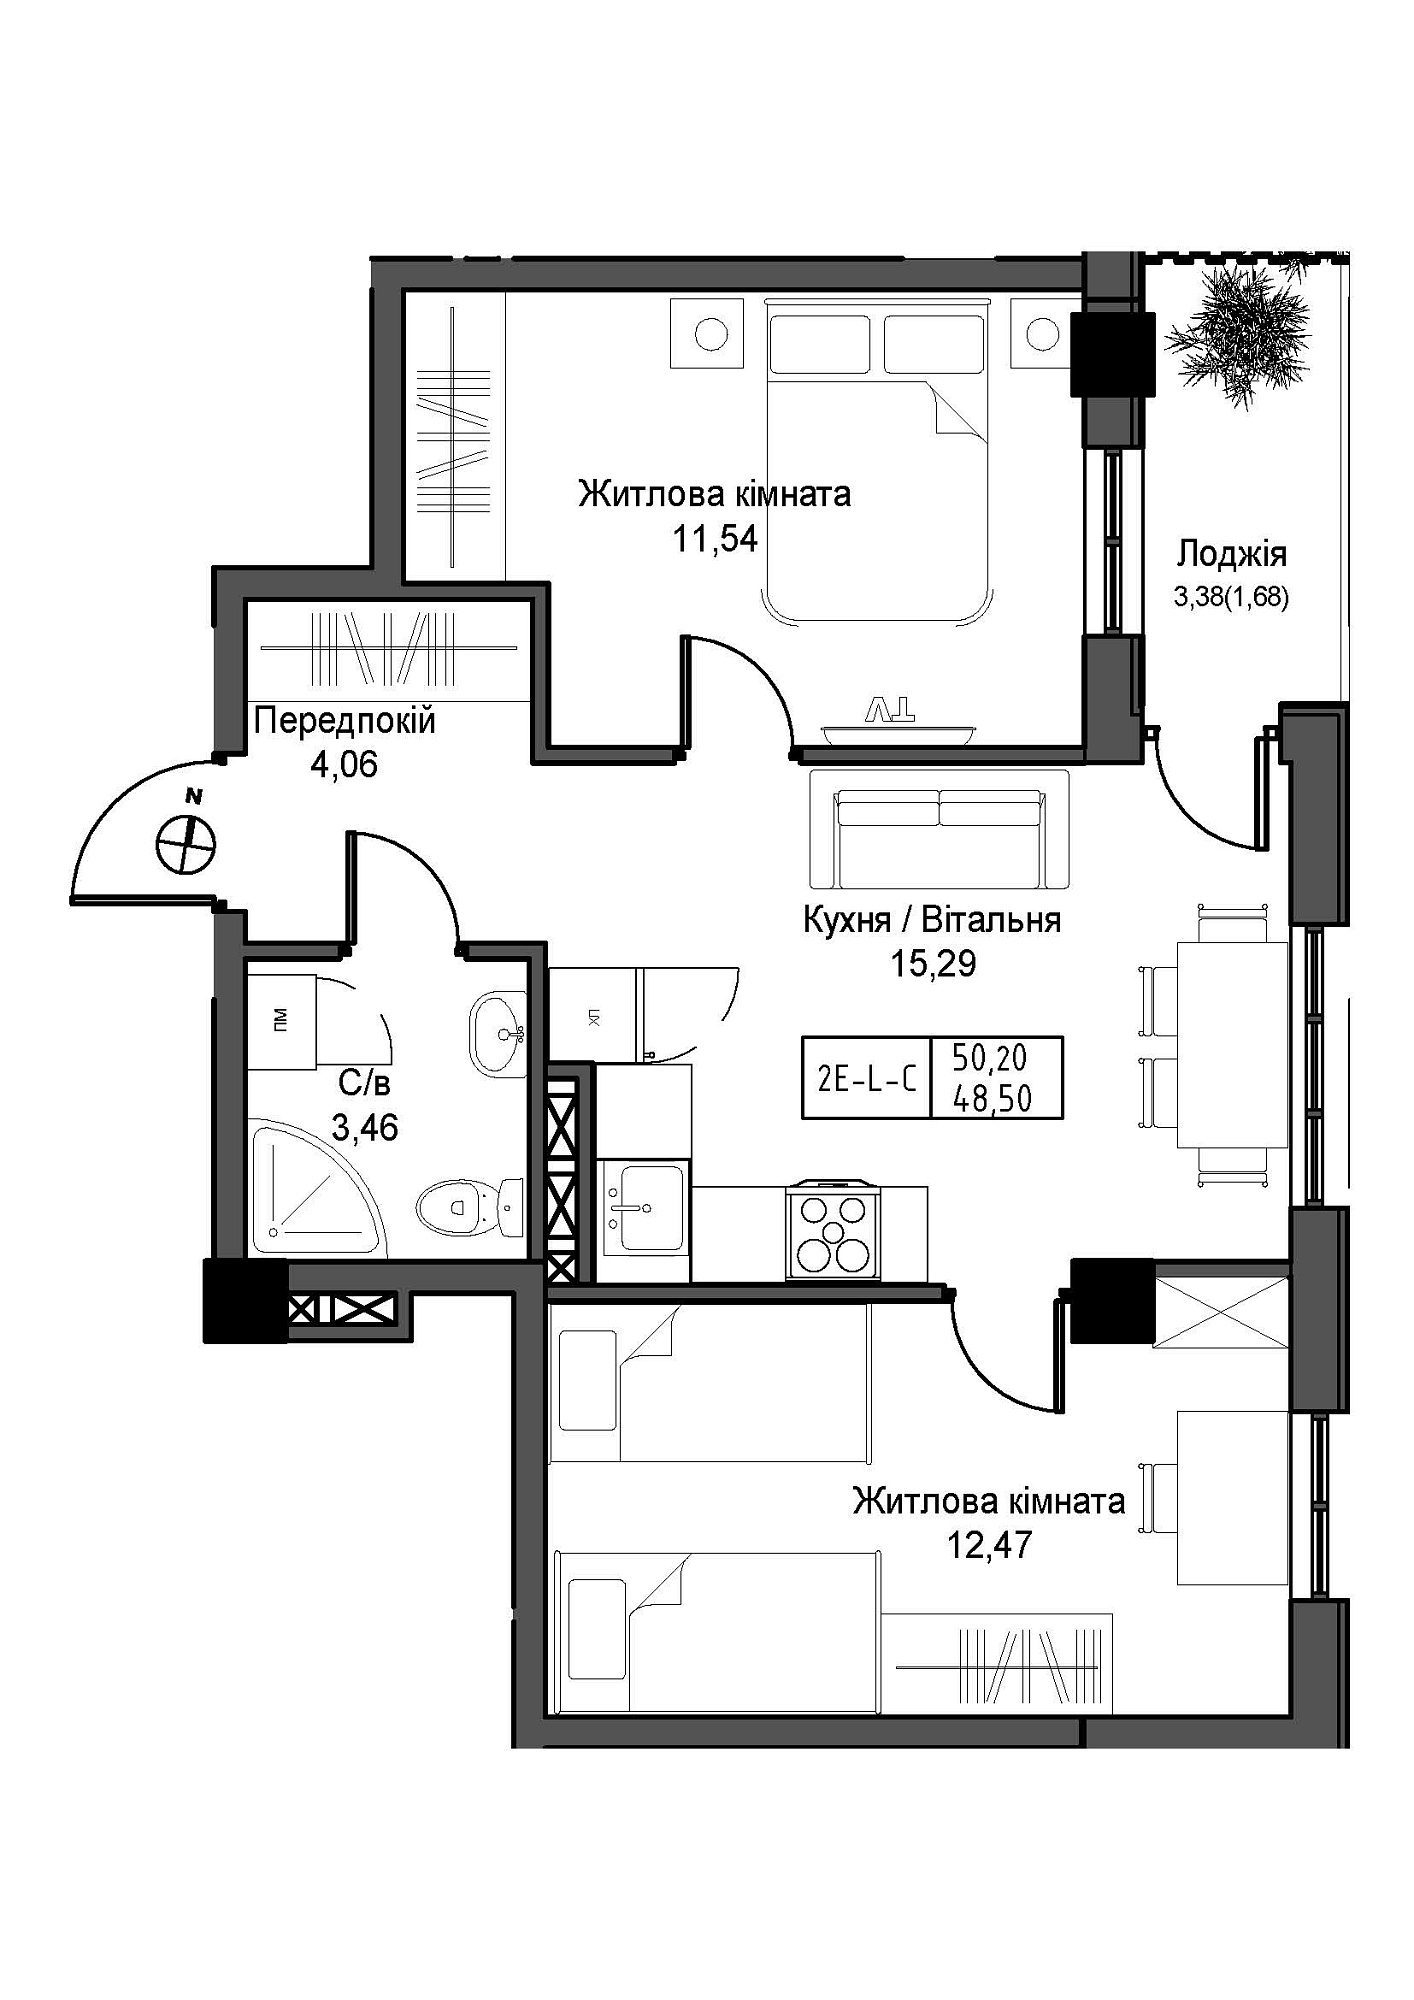 Planning 2-rm flats area 48.5m2, UM-007-05/0007.